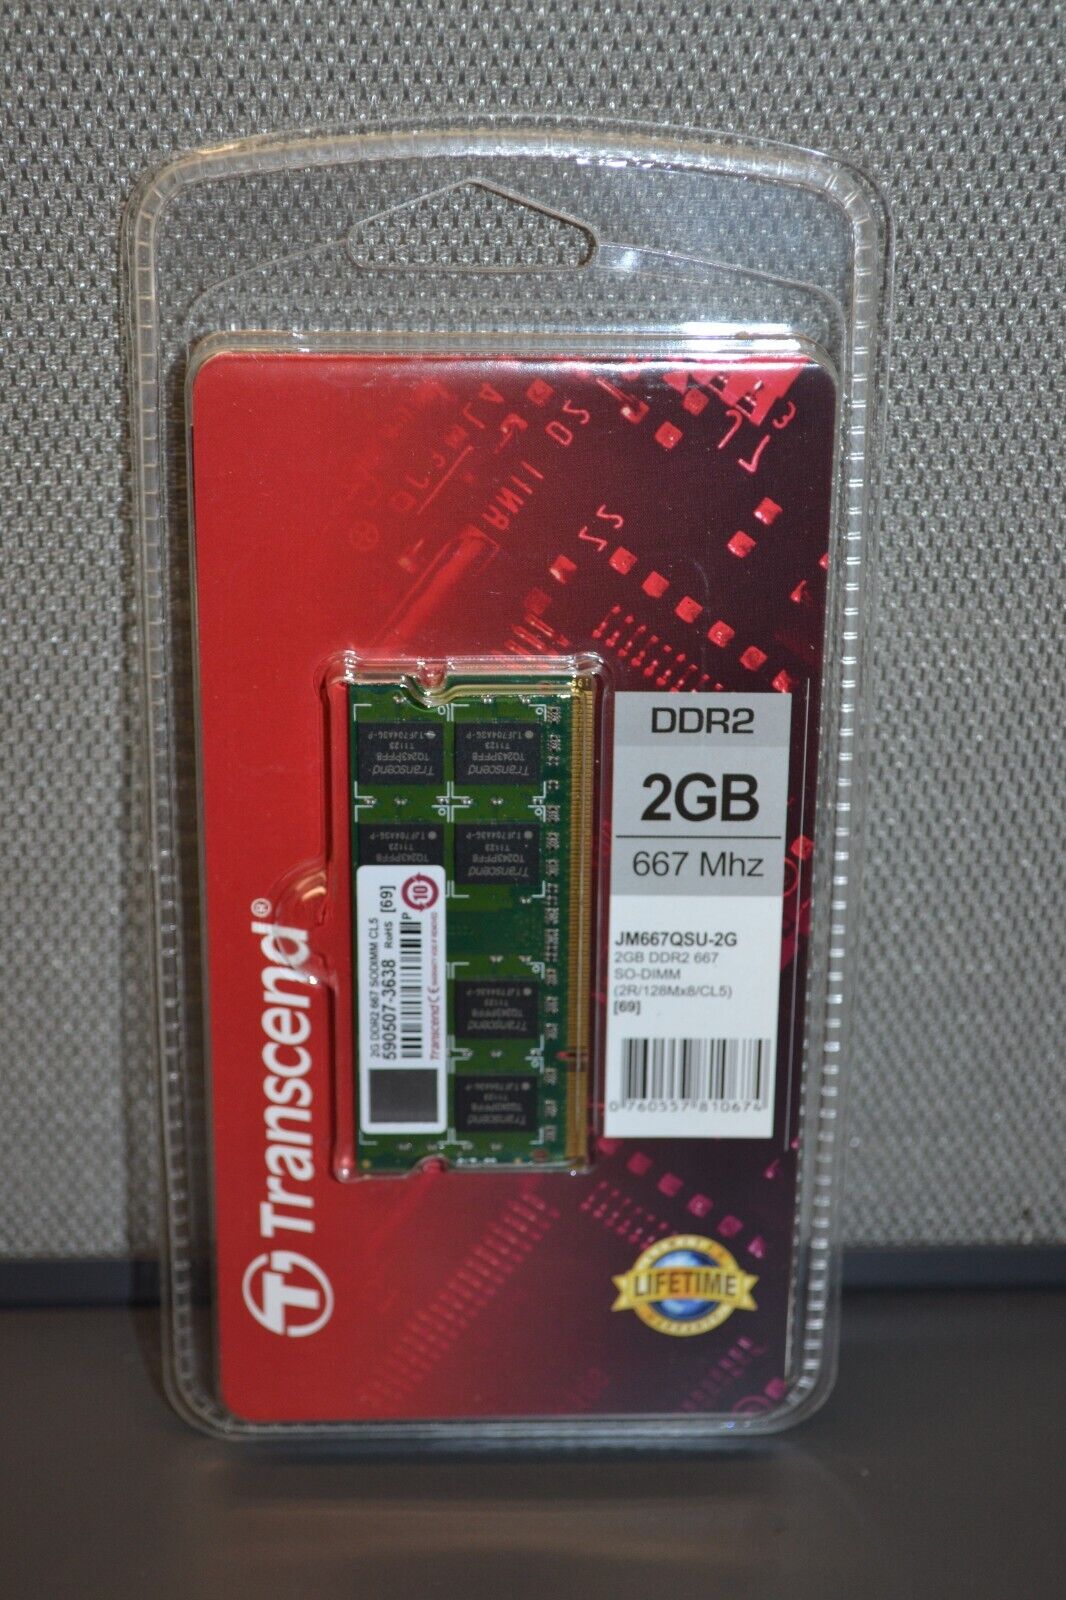 Transcend 2GB DDR2 667 MHz JM667QSU-2G - New - Sealed